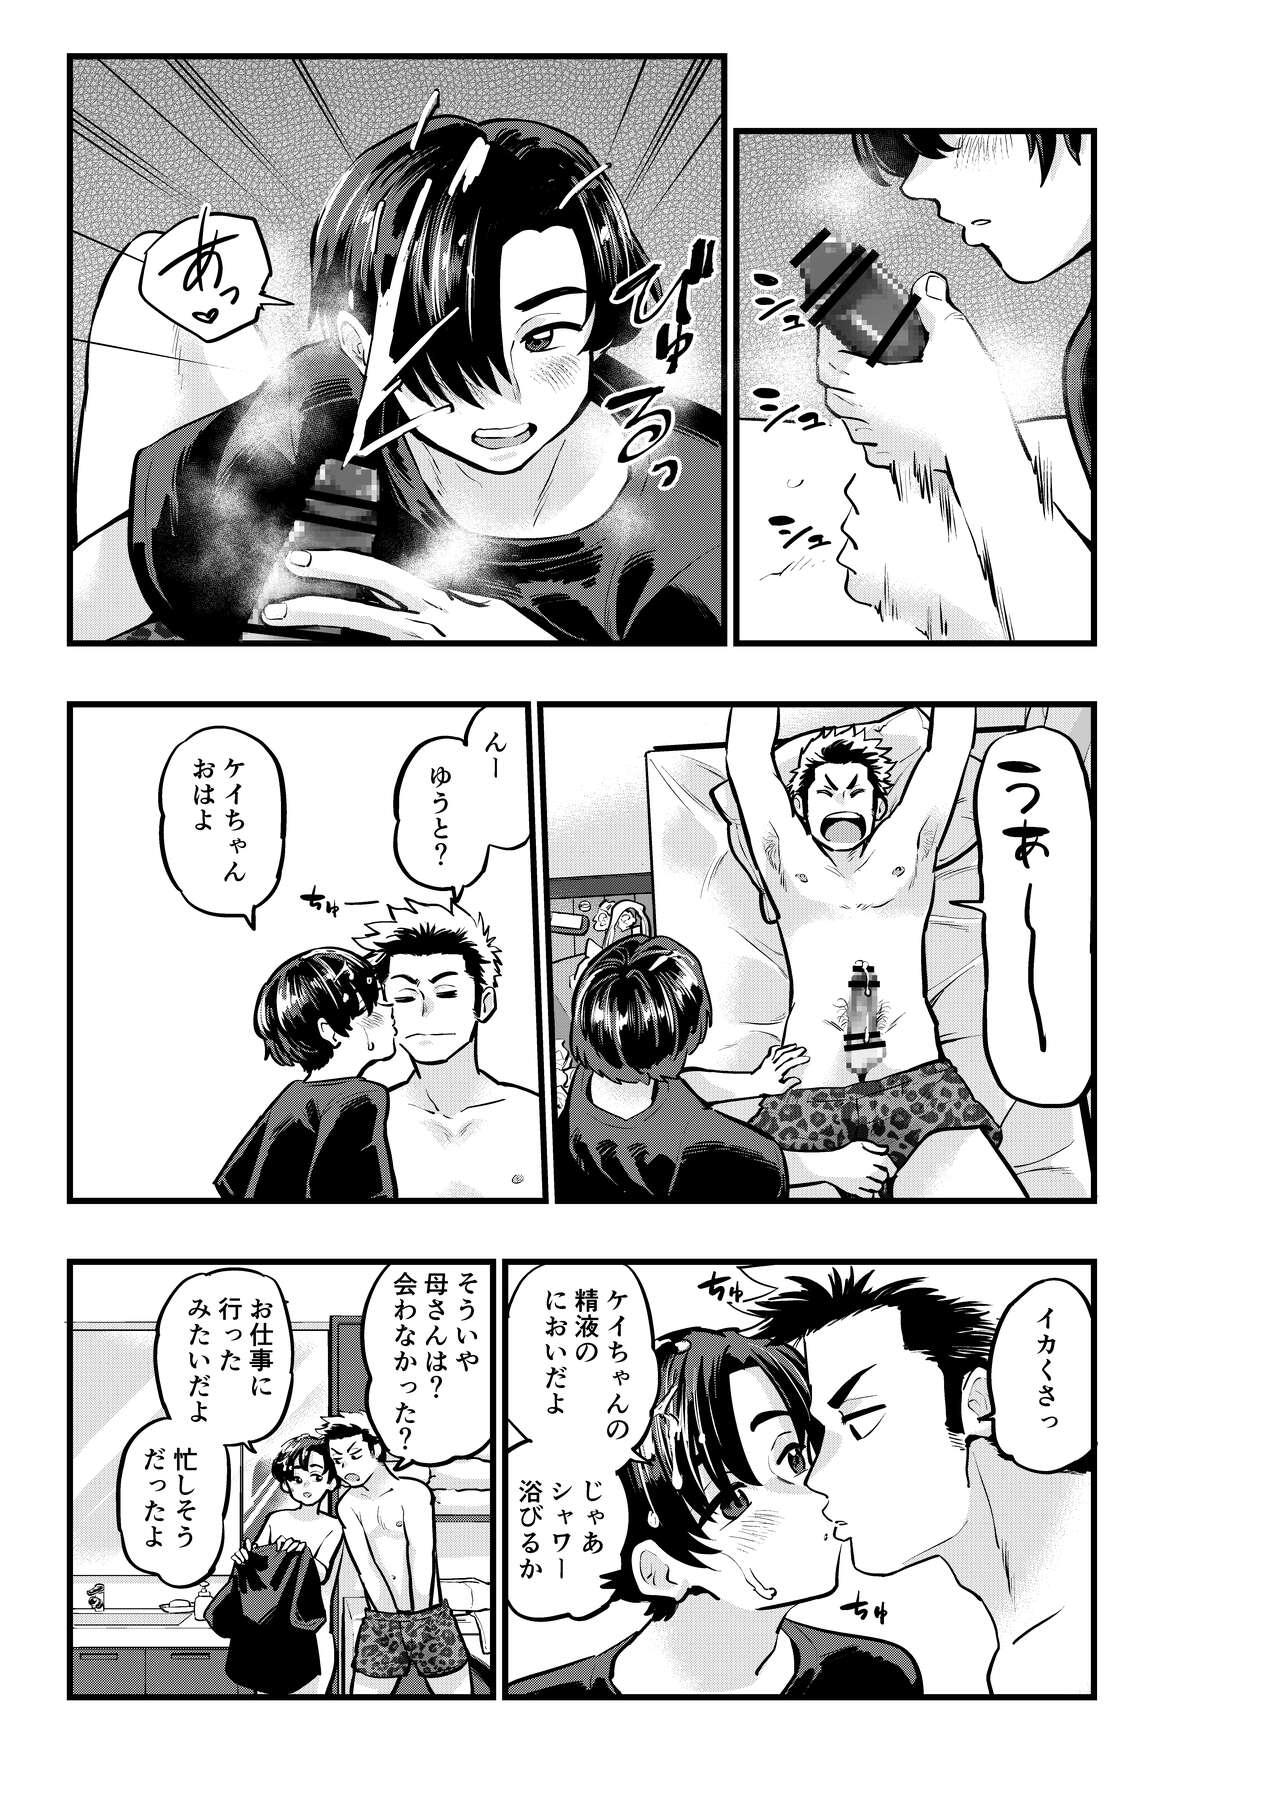 Soapy Date no Yotei wa Cancel de - Original Submission - Page 7